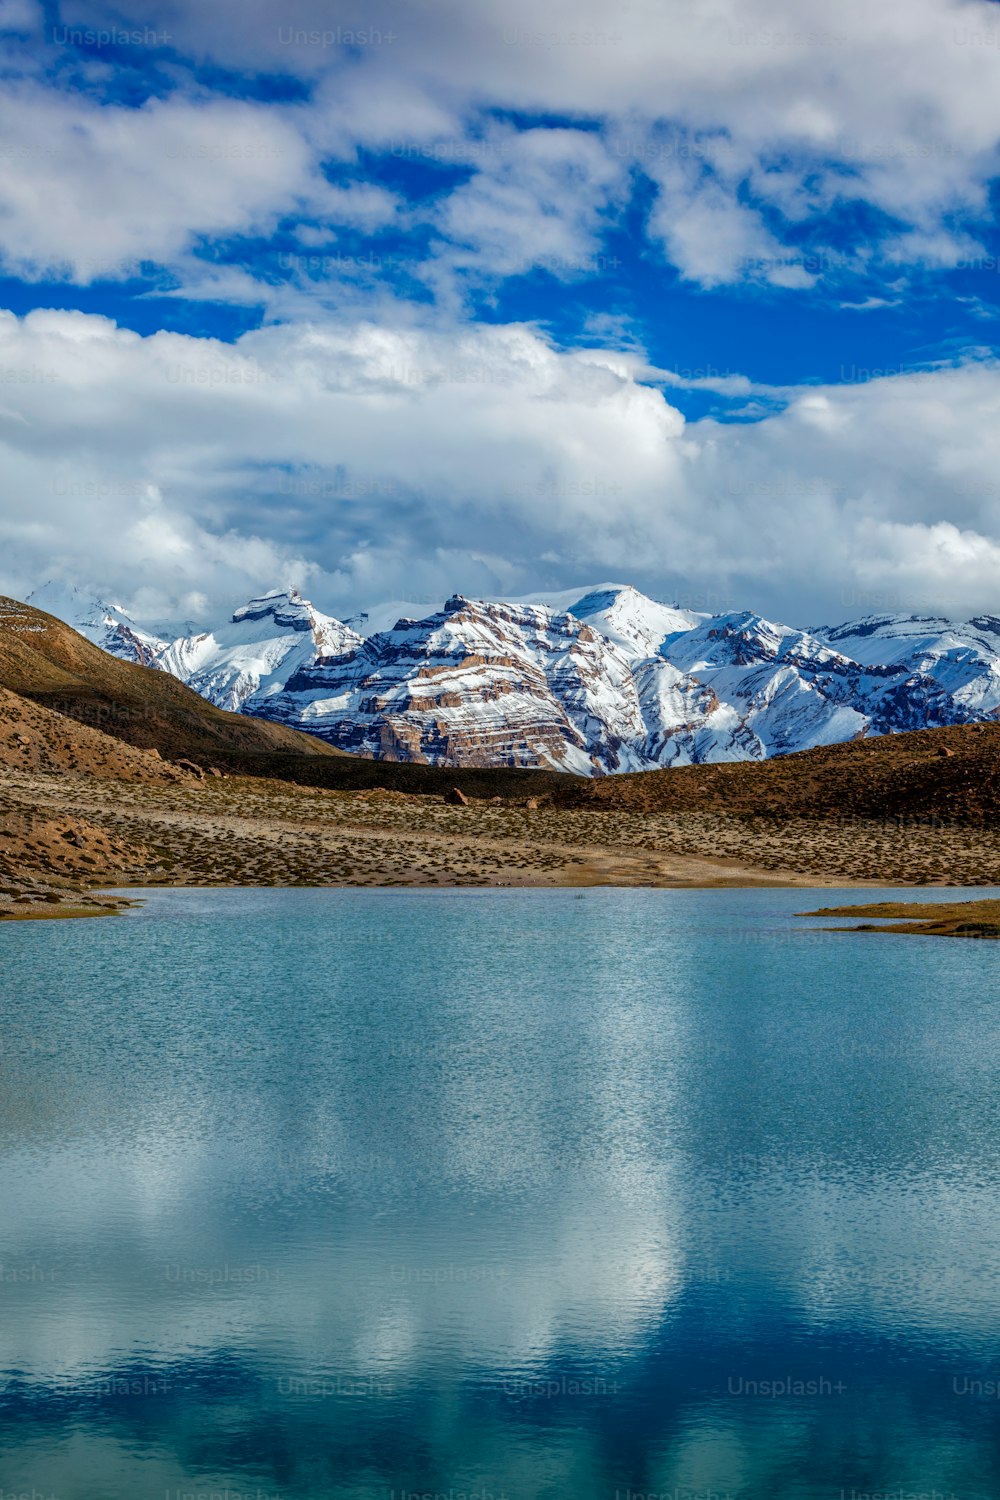 Lago Dhankar no Himalaia. Vale de Spiti, Himachal Pradesh, Índia